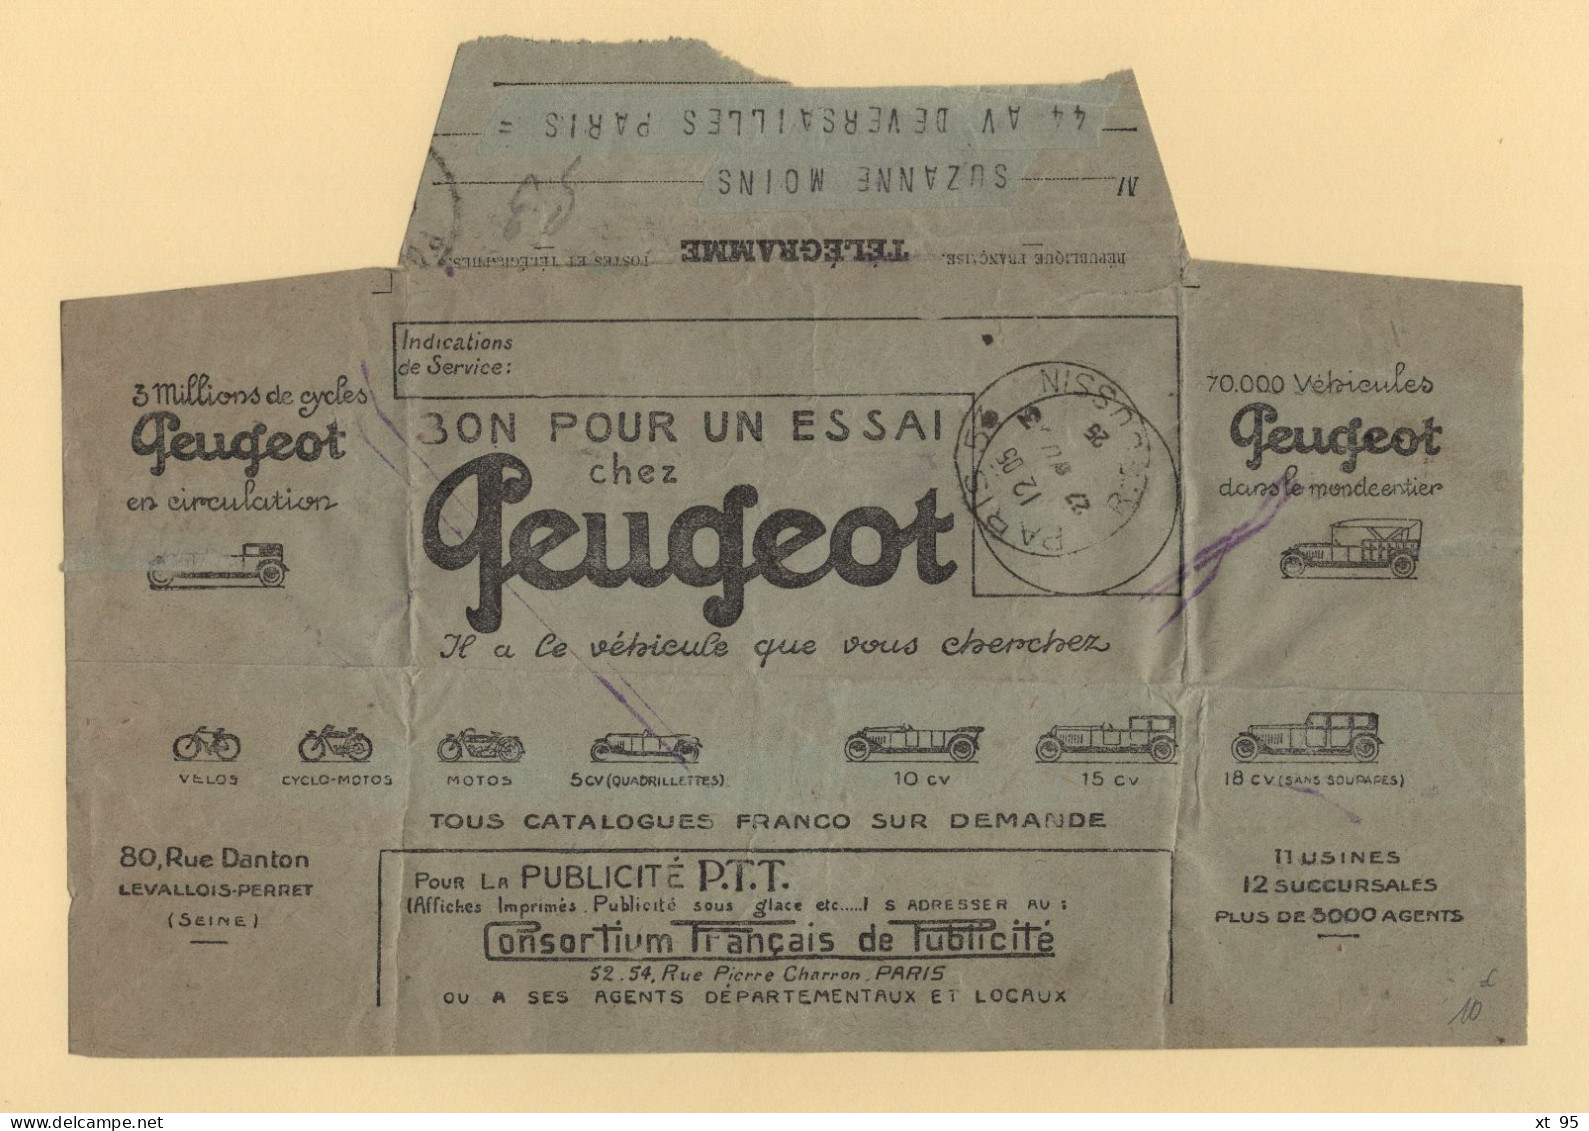 Telegramme Illustre - Peugeot - 1925 - Mascara Algerie - Telegraphie Und Telefon